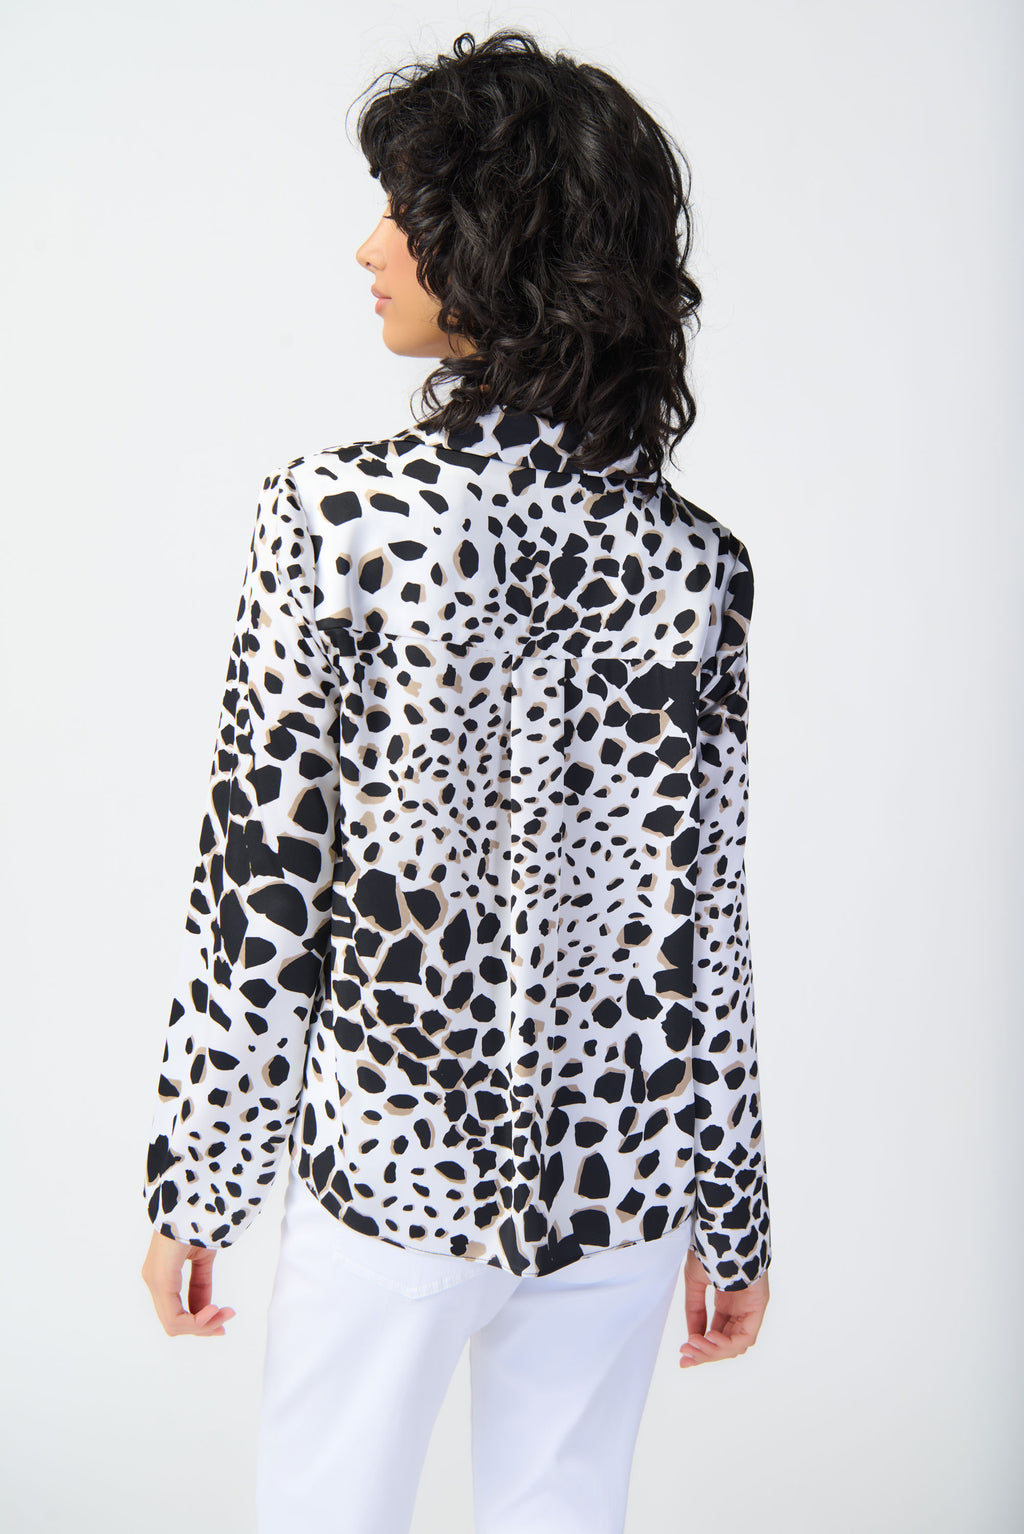 Jospeh Ribkoff Vanilla/Multi Animal Print Top with Cowl Neckline Style 241303